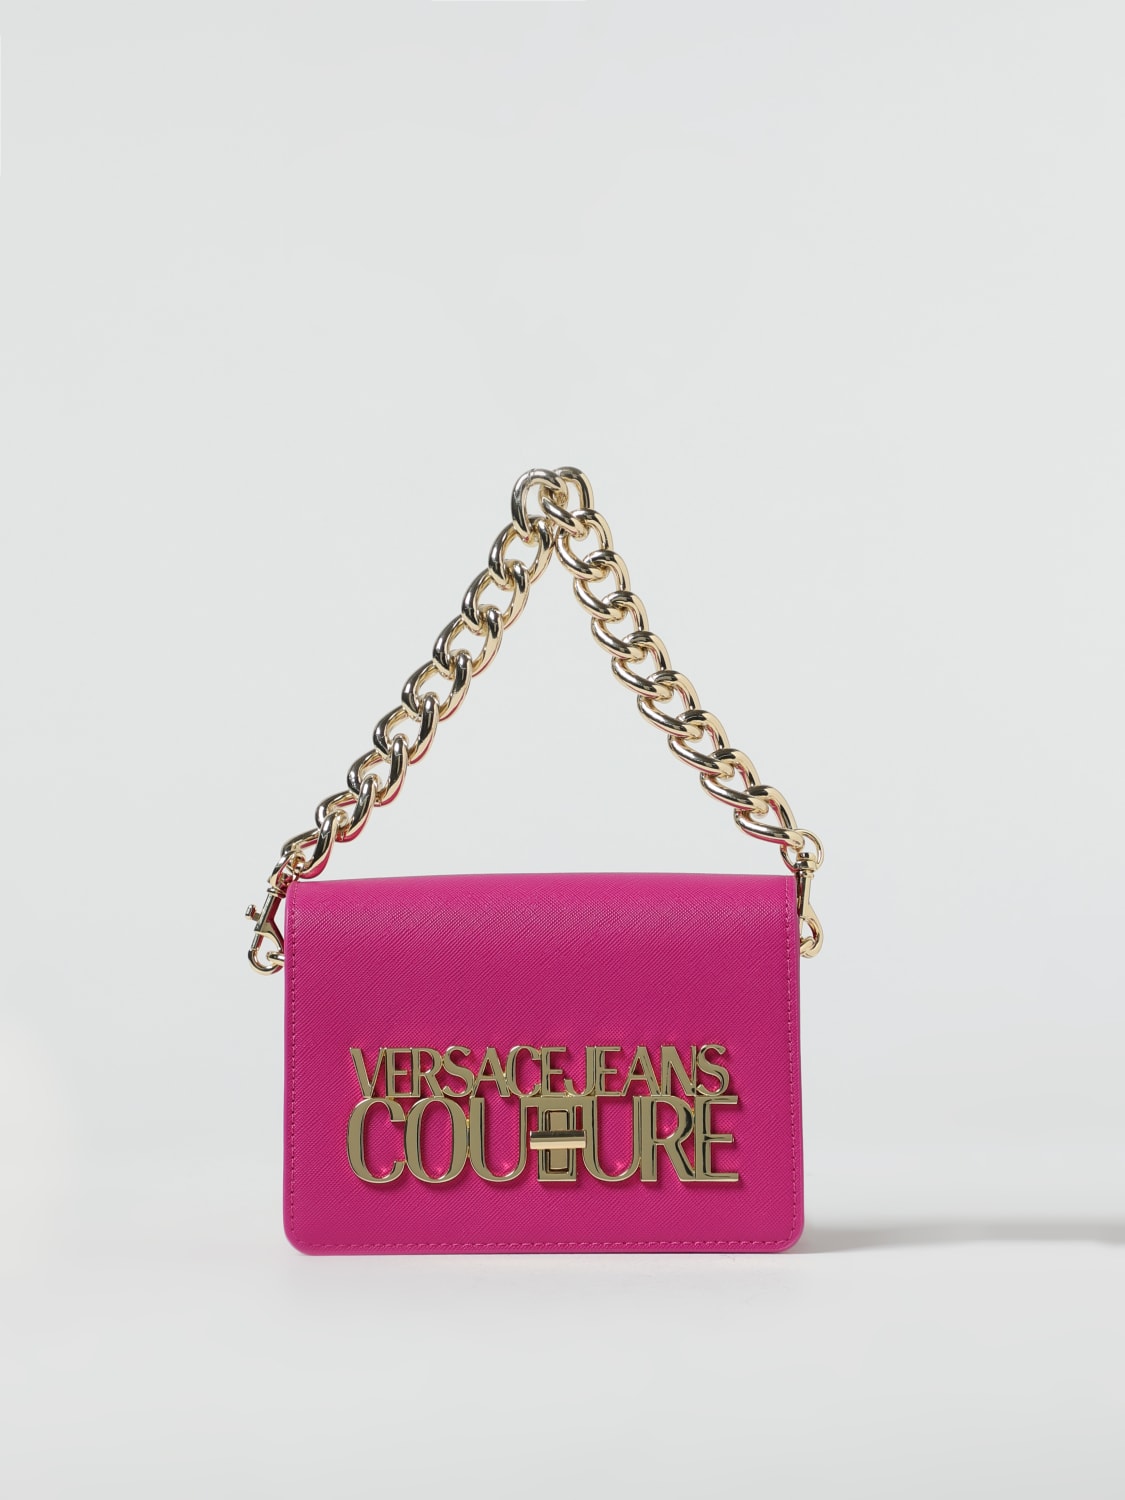 Versace Jeans Couture Logo Lock Black, Crossbody Bag